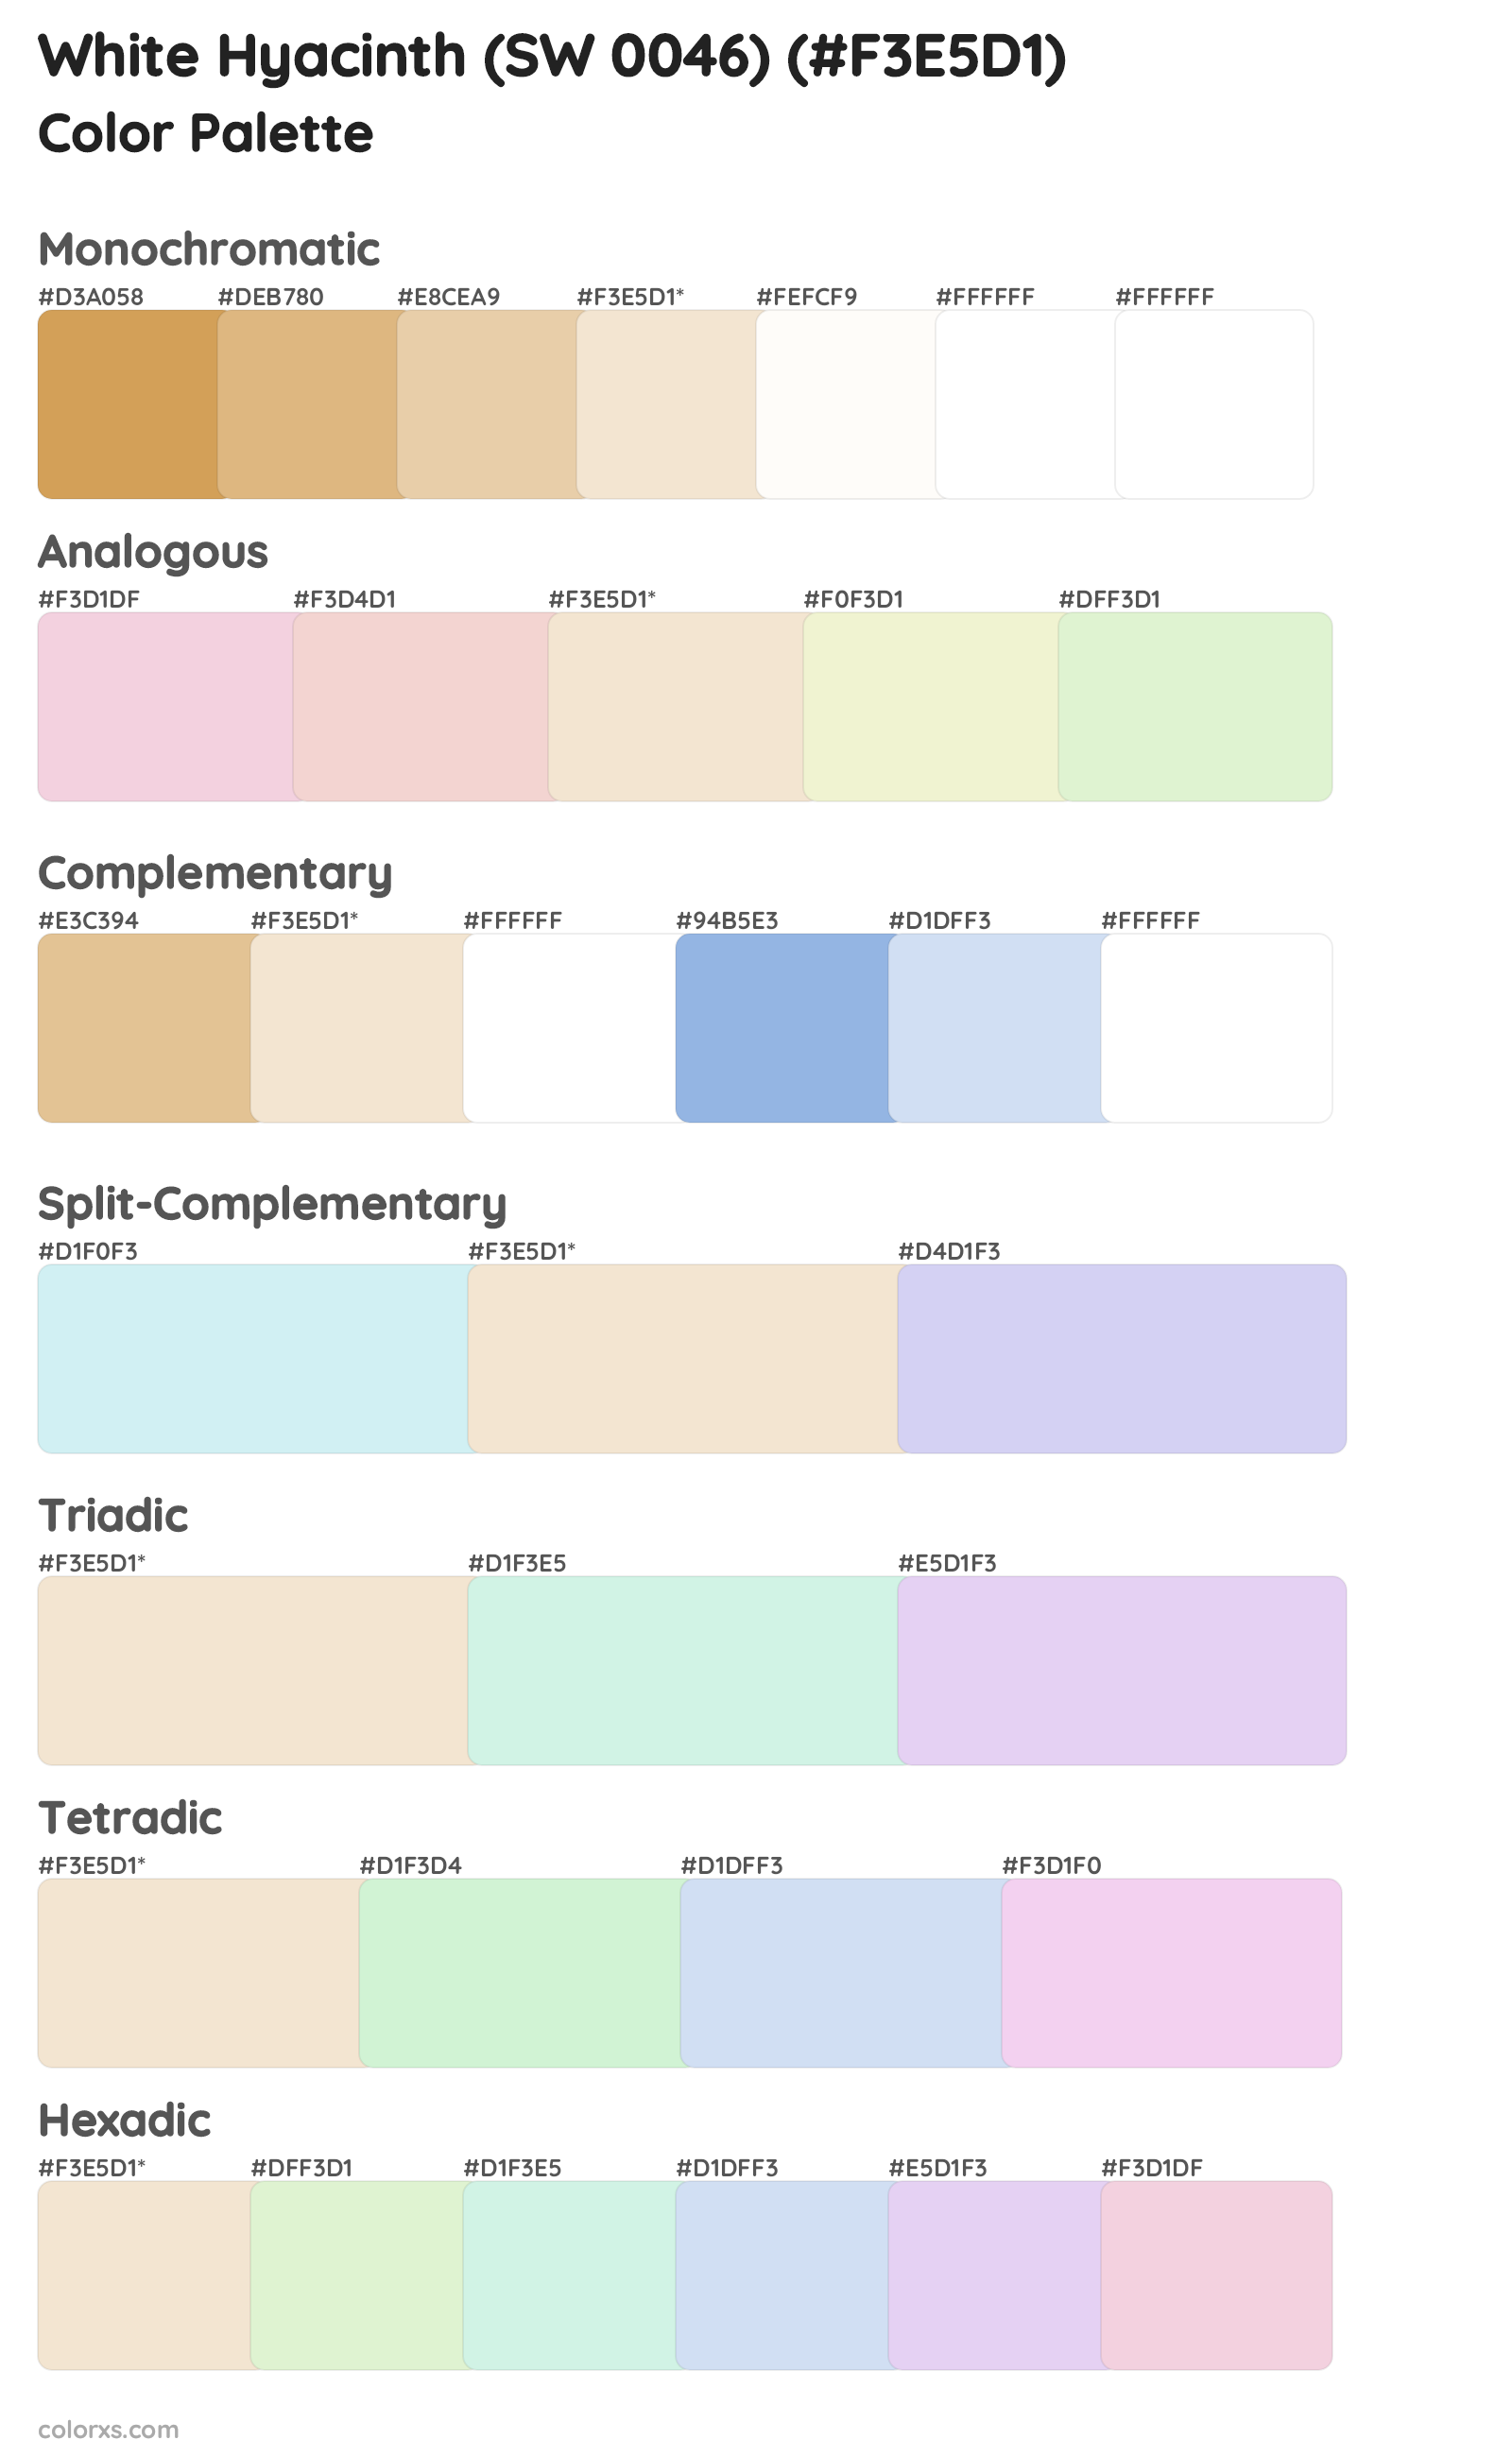 White Hyacinth (SW 0046) Color Scheme Palettes